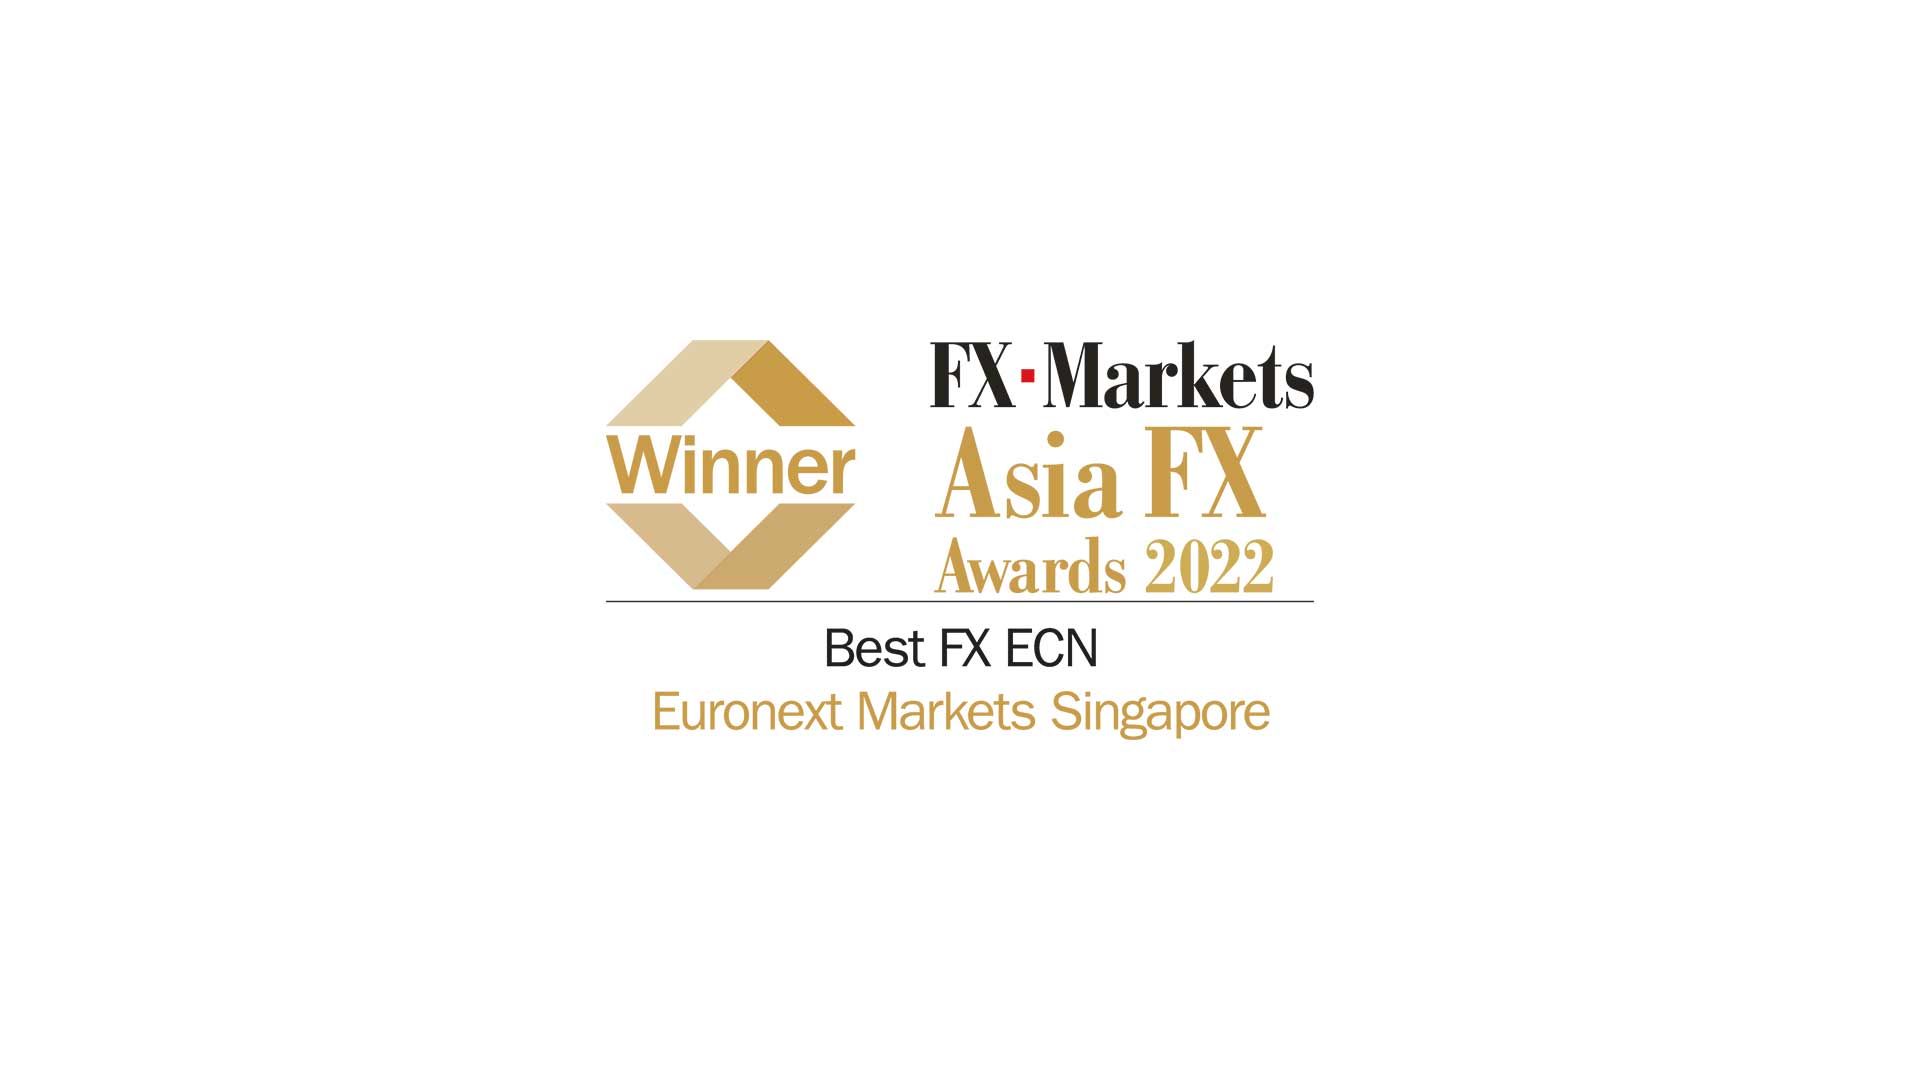 Asia FX Awards 2022: The winners - FX Markets